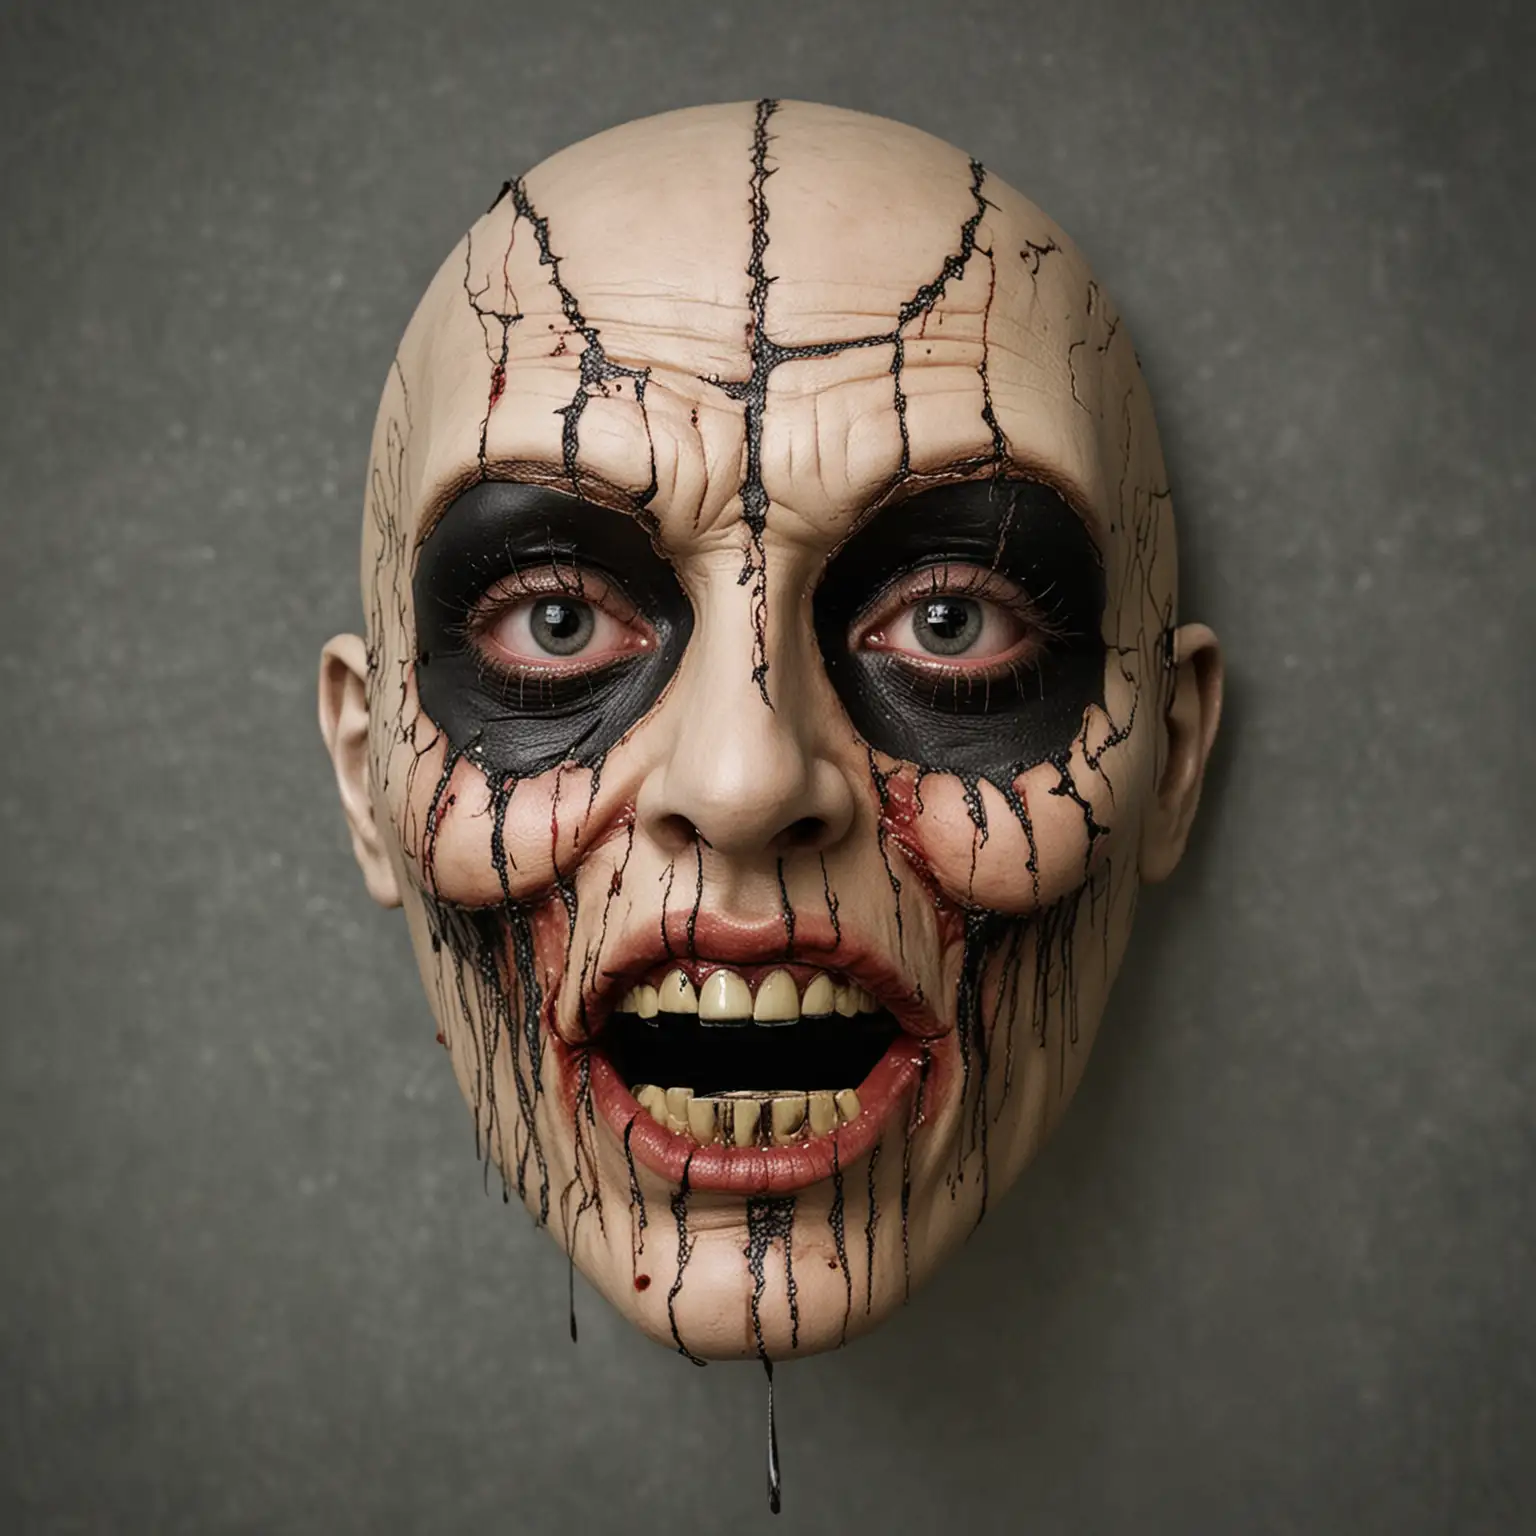 Horror Villain Drama Mask with Cracks and Stitches